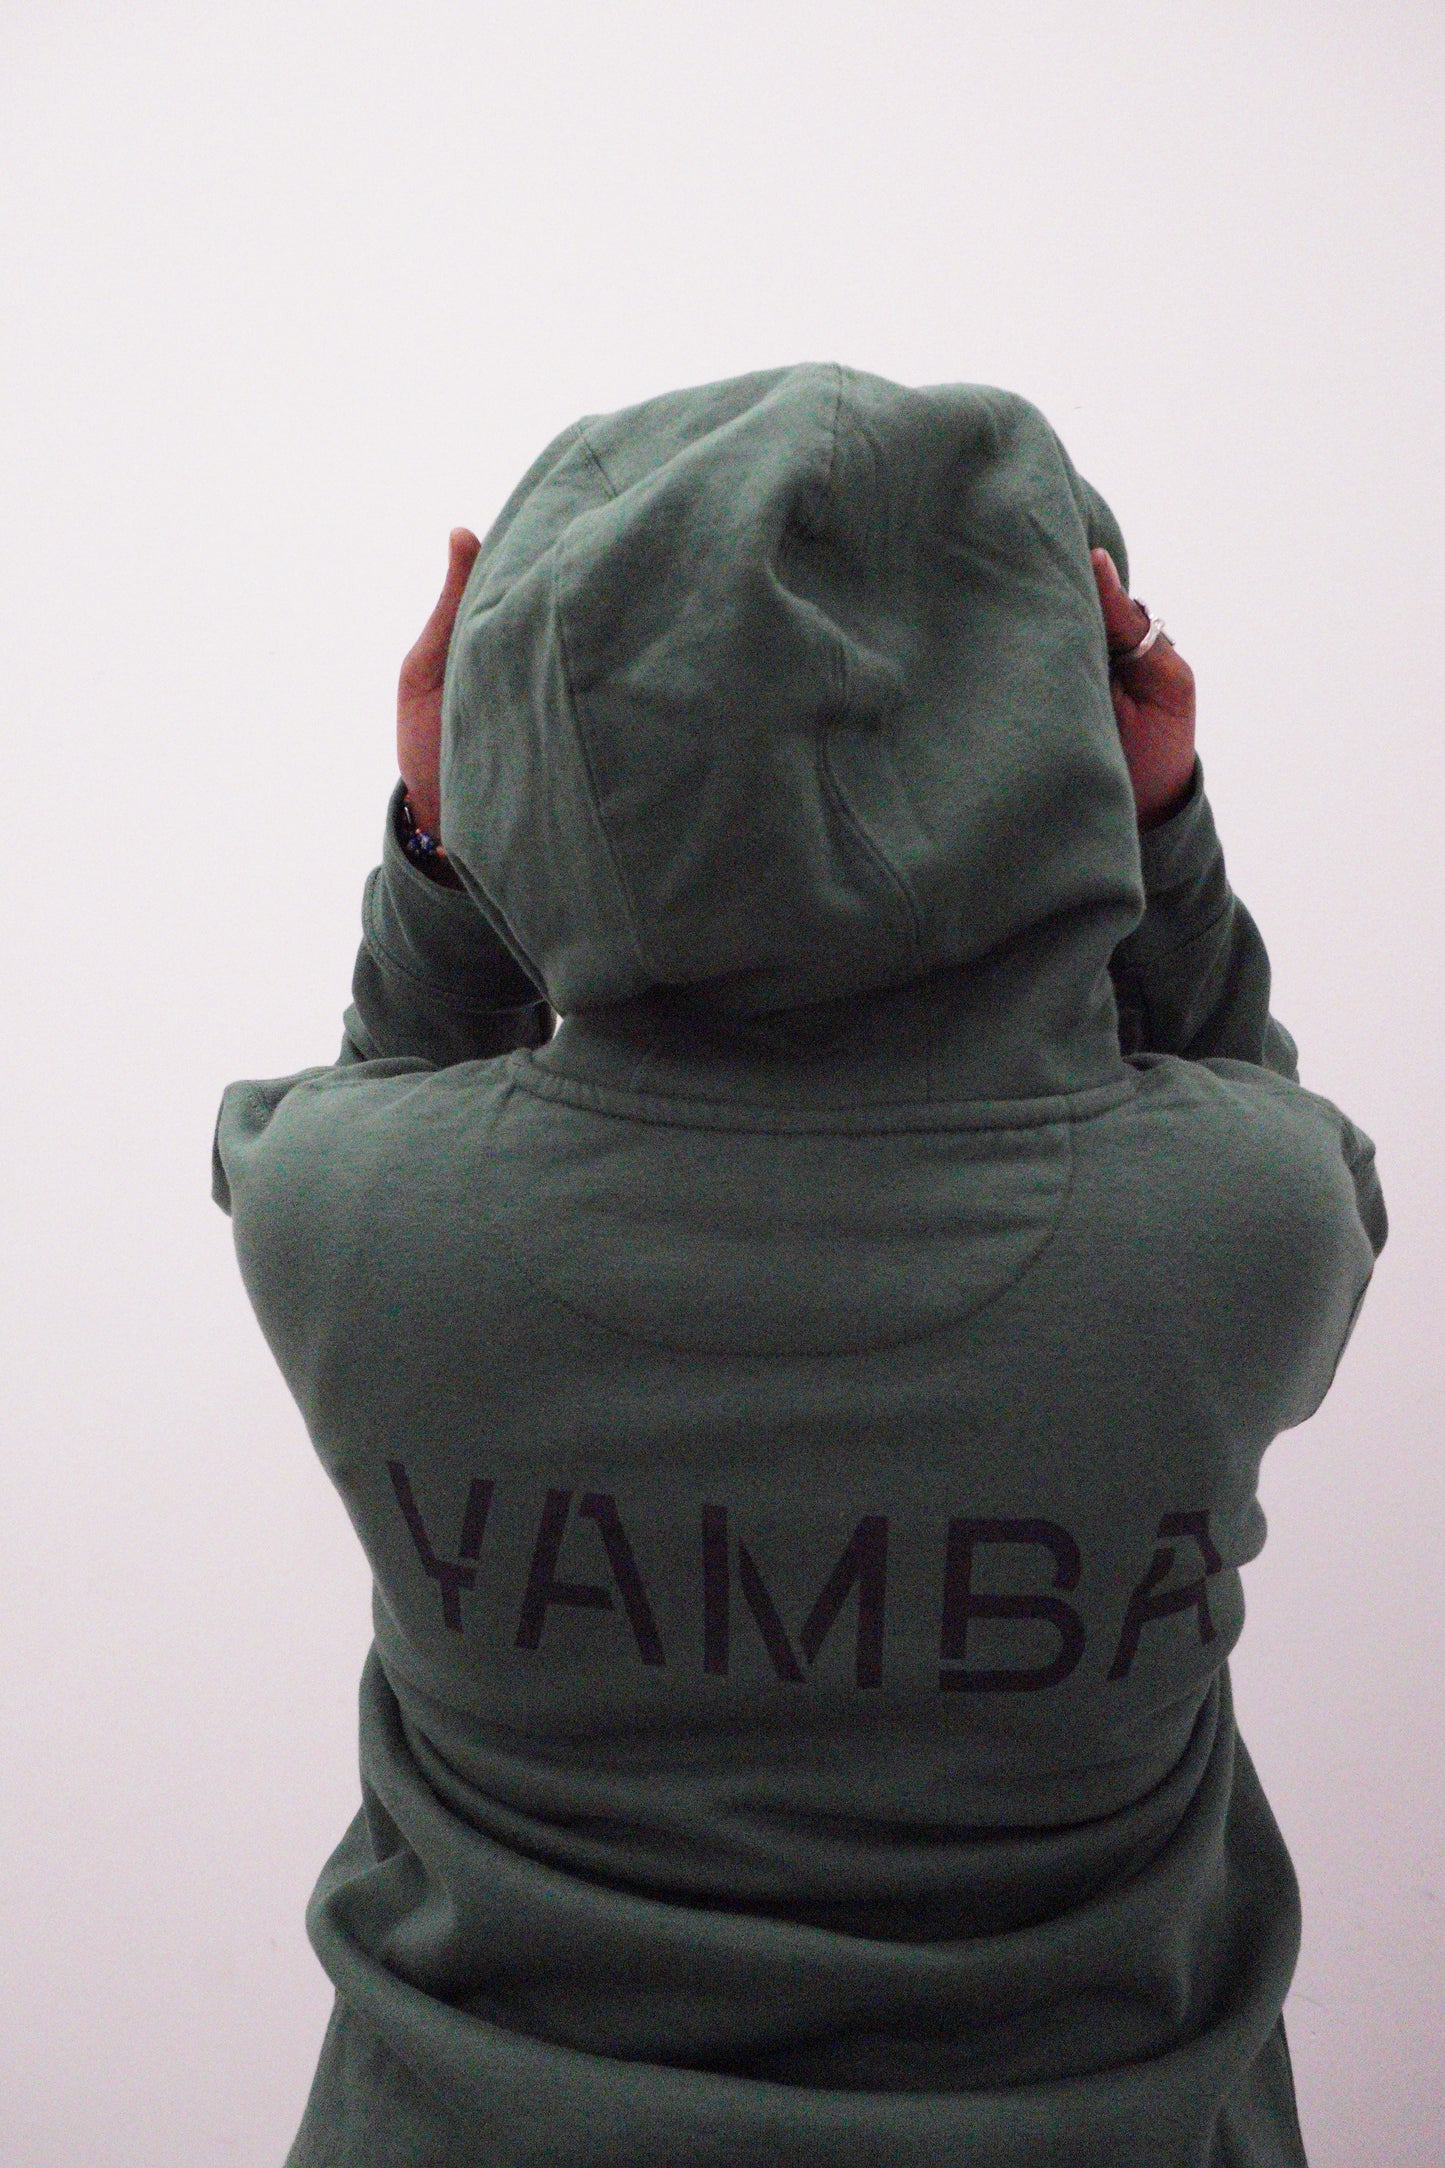 Yamba Unisex Hoodie